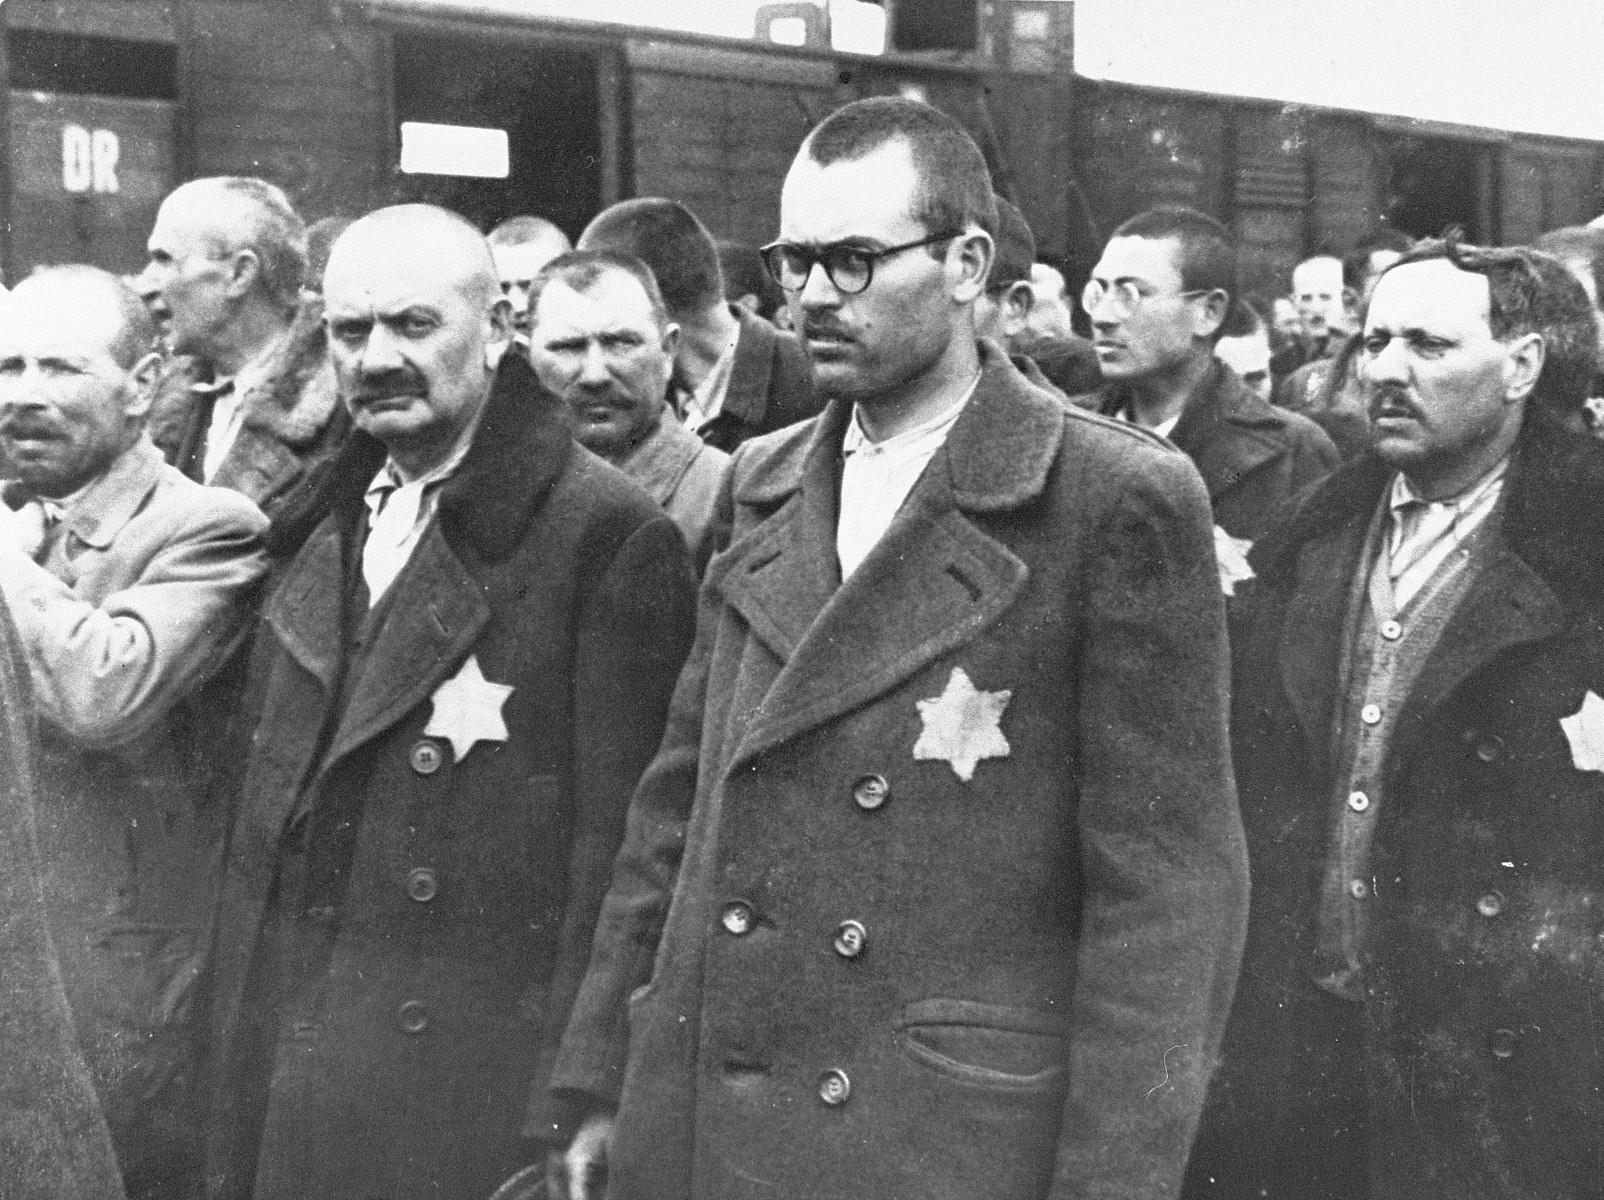 Jewish men from Subcarpathian Rus await selection on the ramp at Auschwitz-Birkenau.

Among those pictured are Menachem Zvi Fettman (center, in glasses) from Nyirjespuszta and his father, Yaakov Fettman (left).